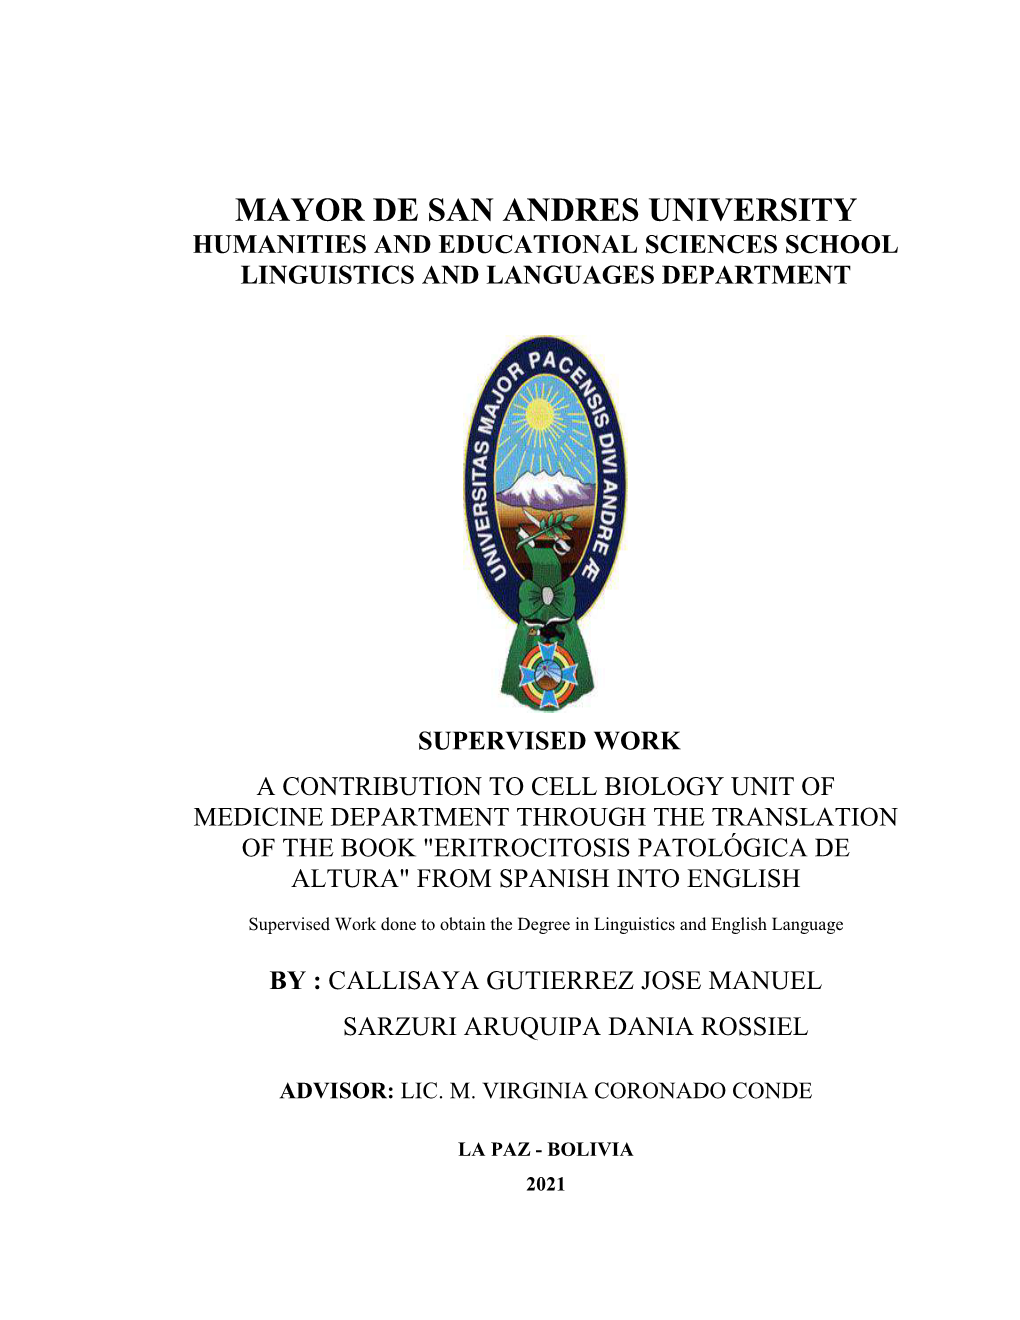 Mayor De San Andres University Humanities and Educational Sciences School Linguistics and Languages Department